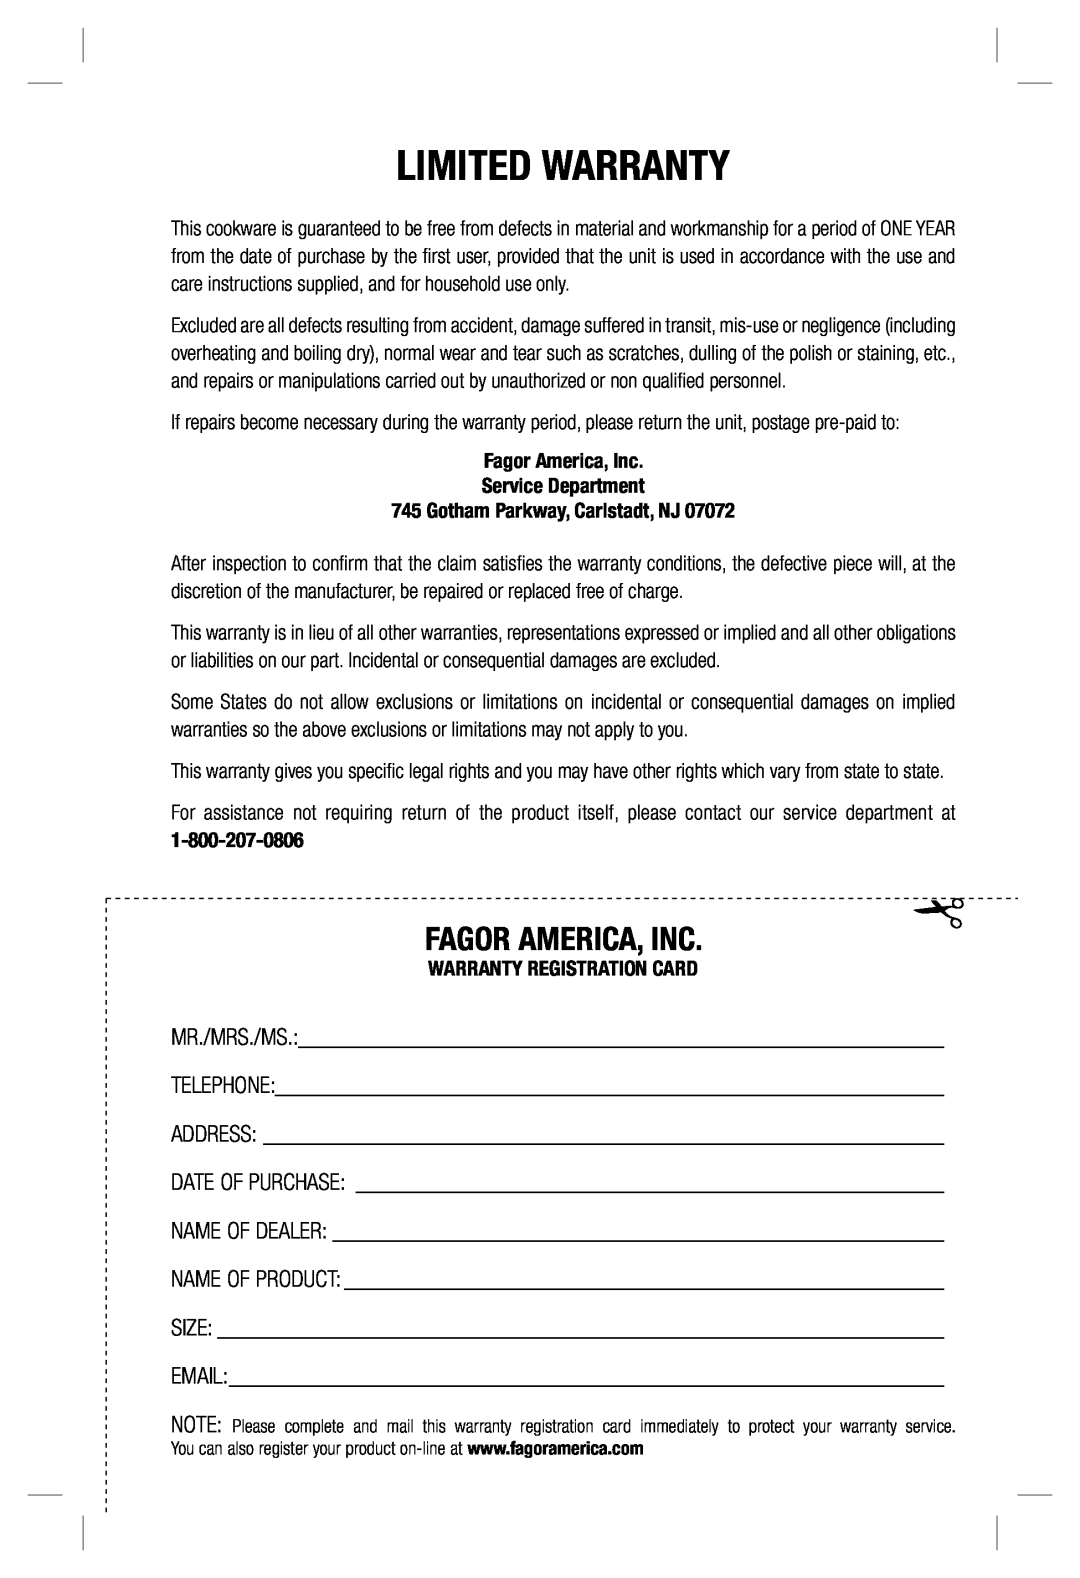 Fagor America none manual Limited Warranty, Fagor America, Inc 